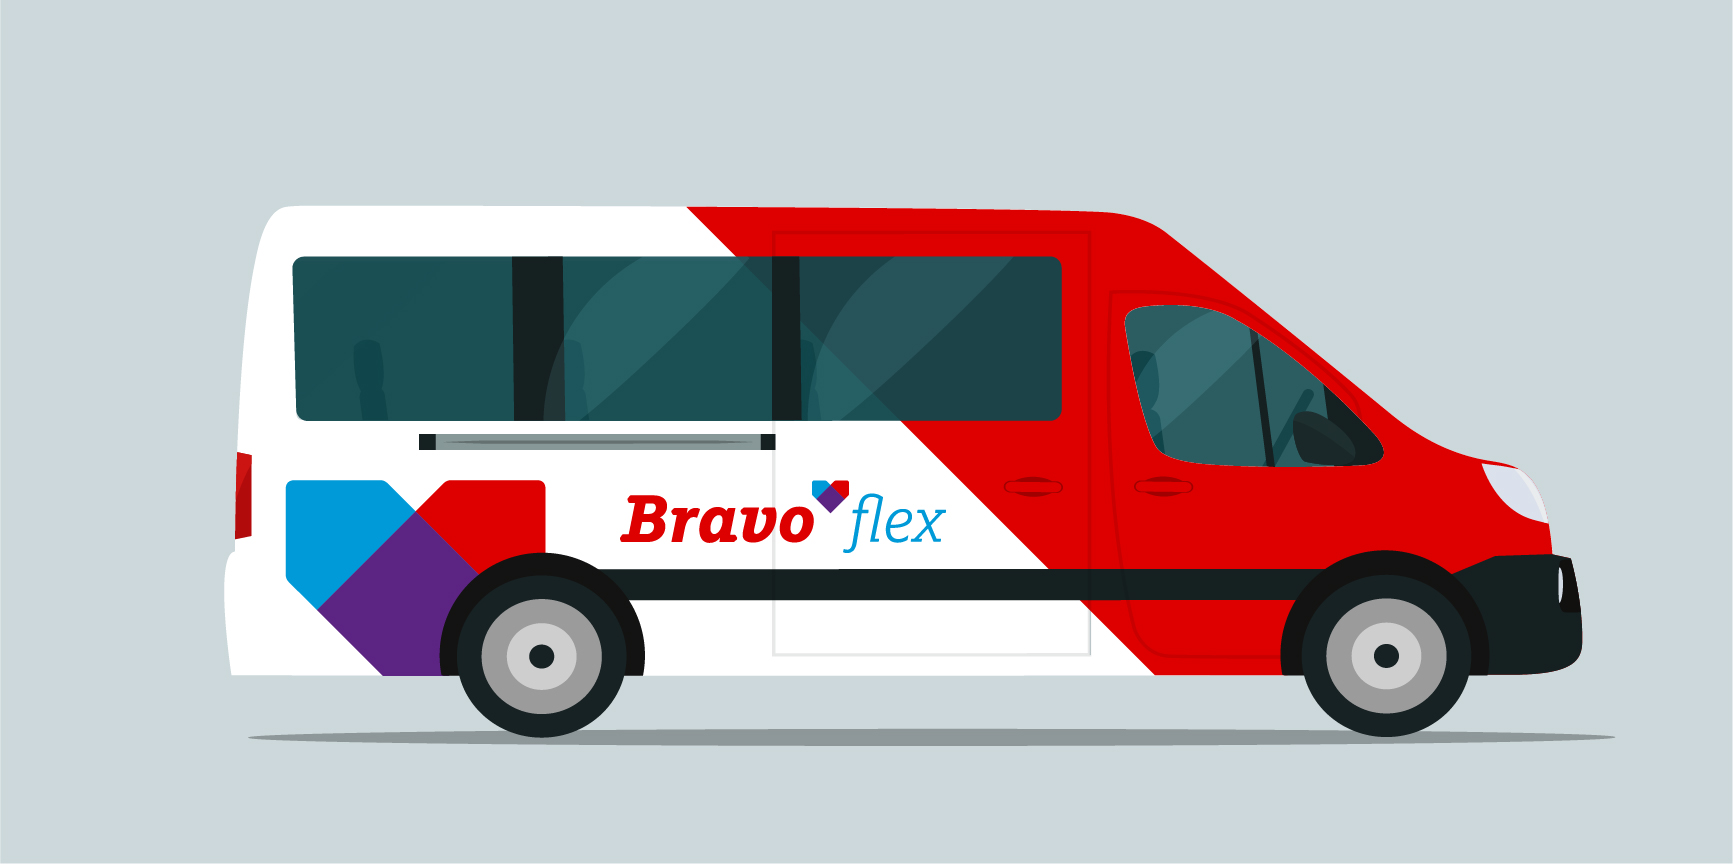 Bravo flex illustratie busje zijaanzicht